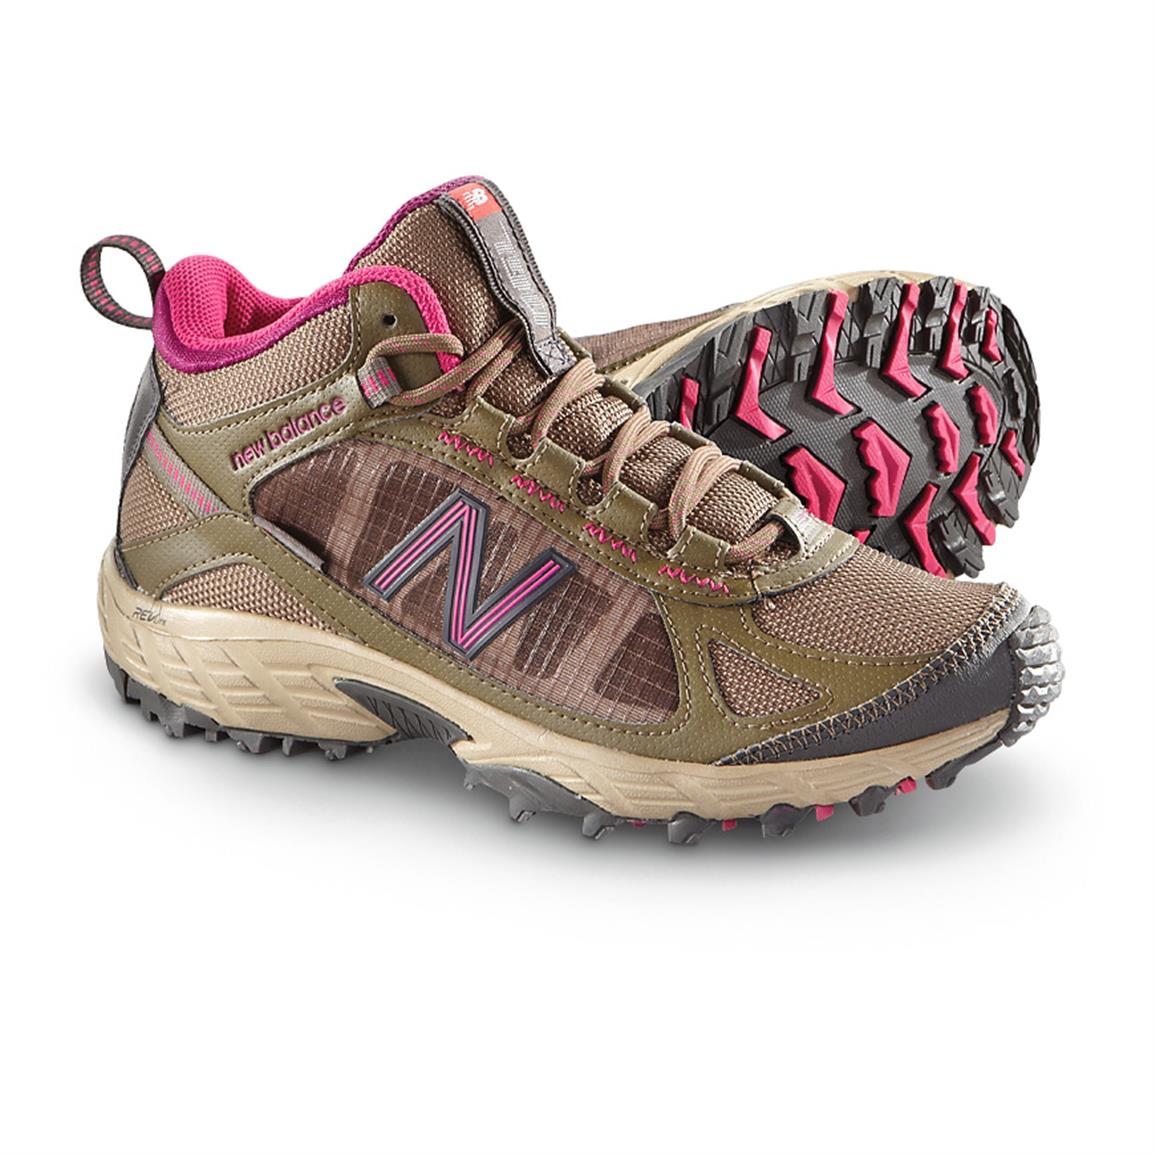 Women's New Balance 790 Hiking Boots 